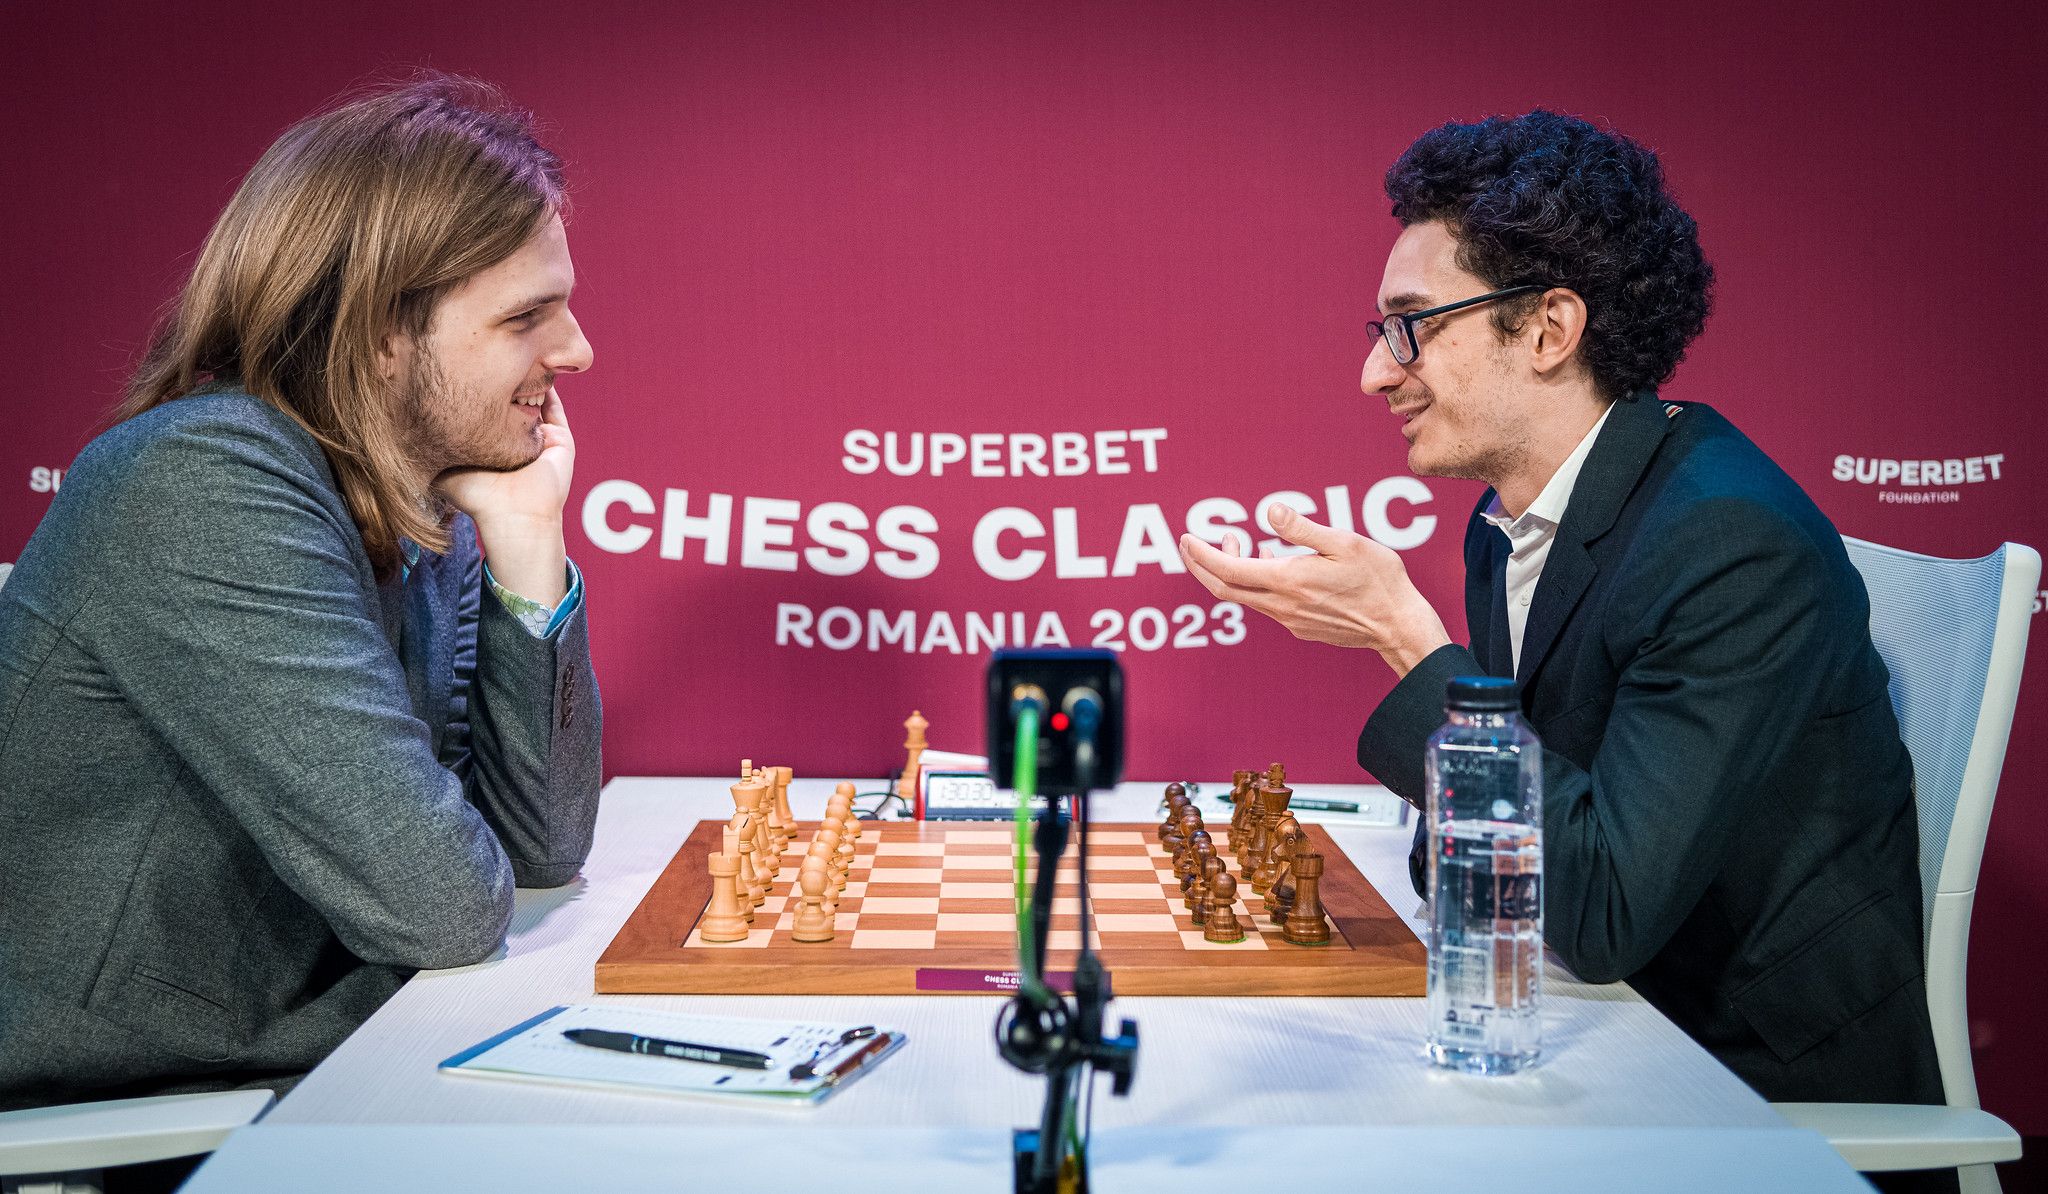 Superbet Chess Classic 1: Giri's gamble almost backfires